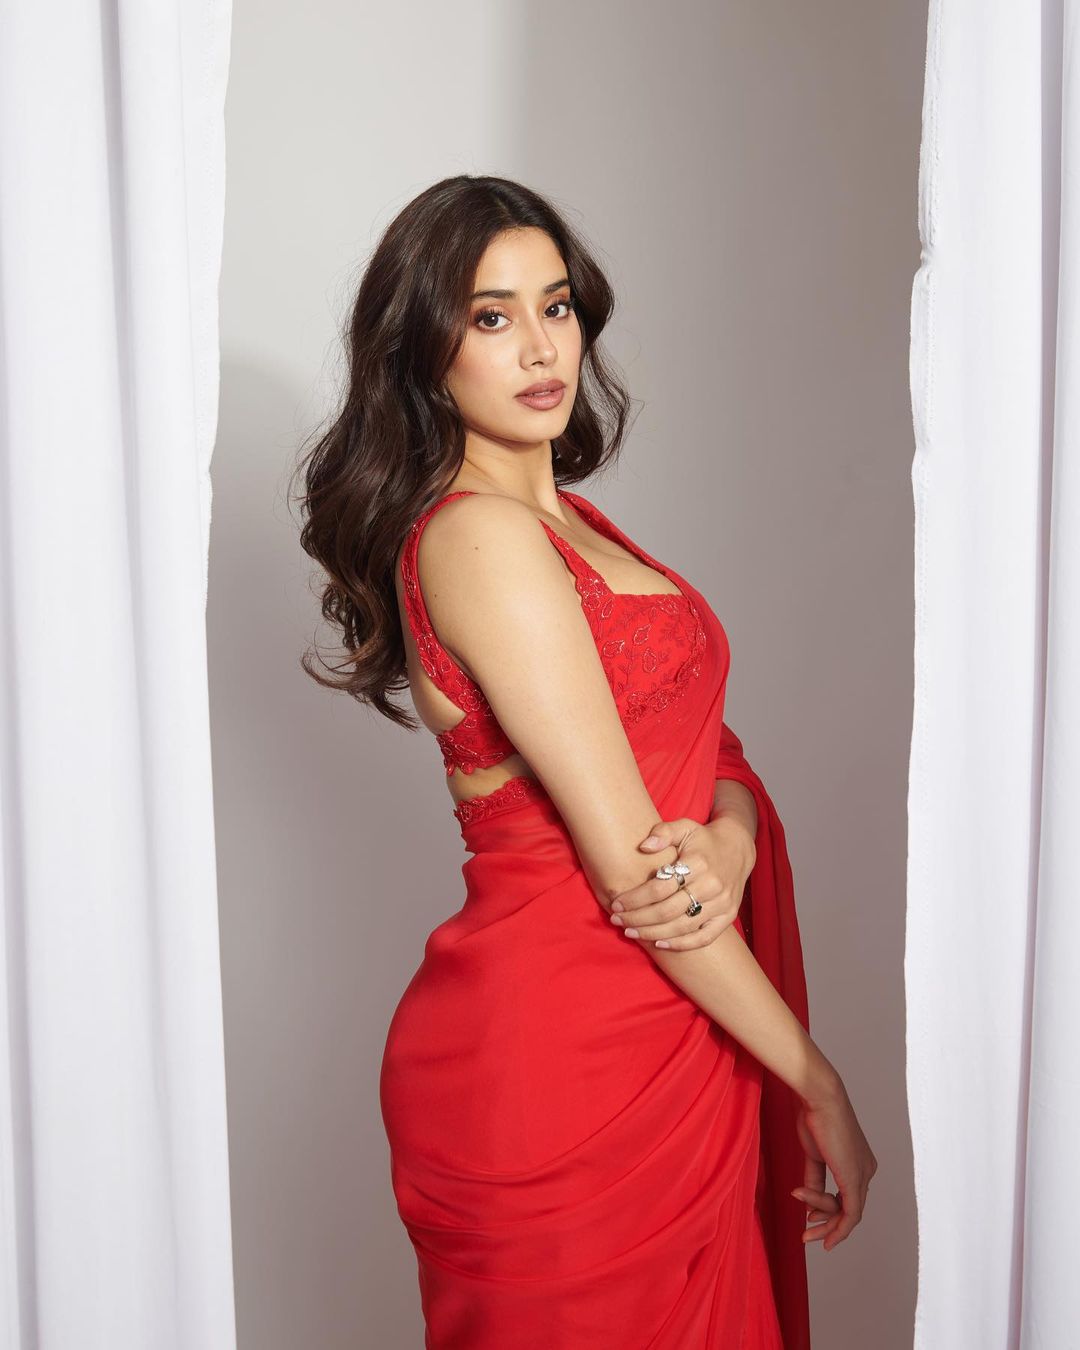 Janhvi Kapoor looks sexy in the plain red chiffon saree.